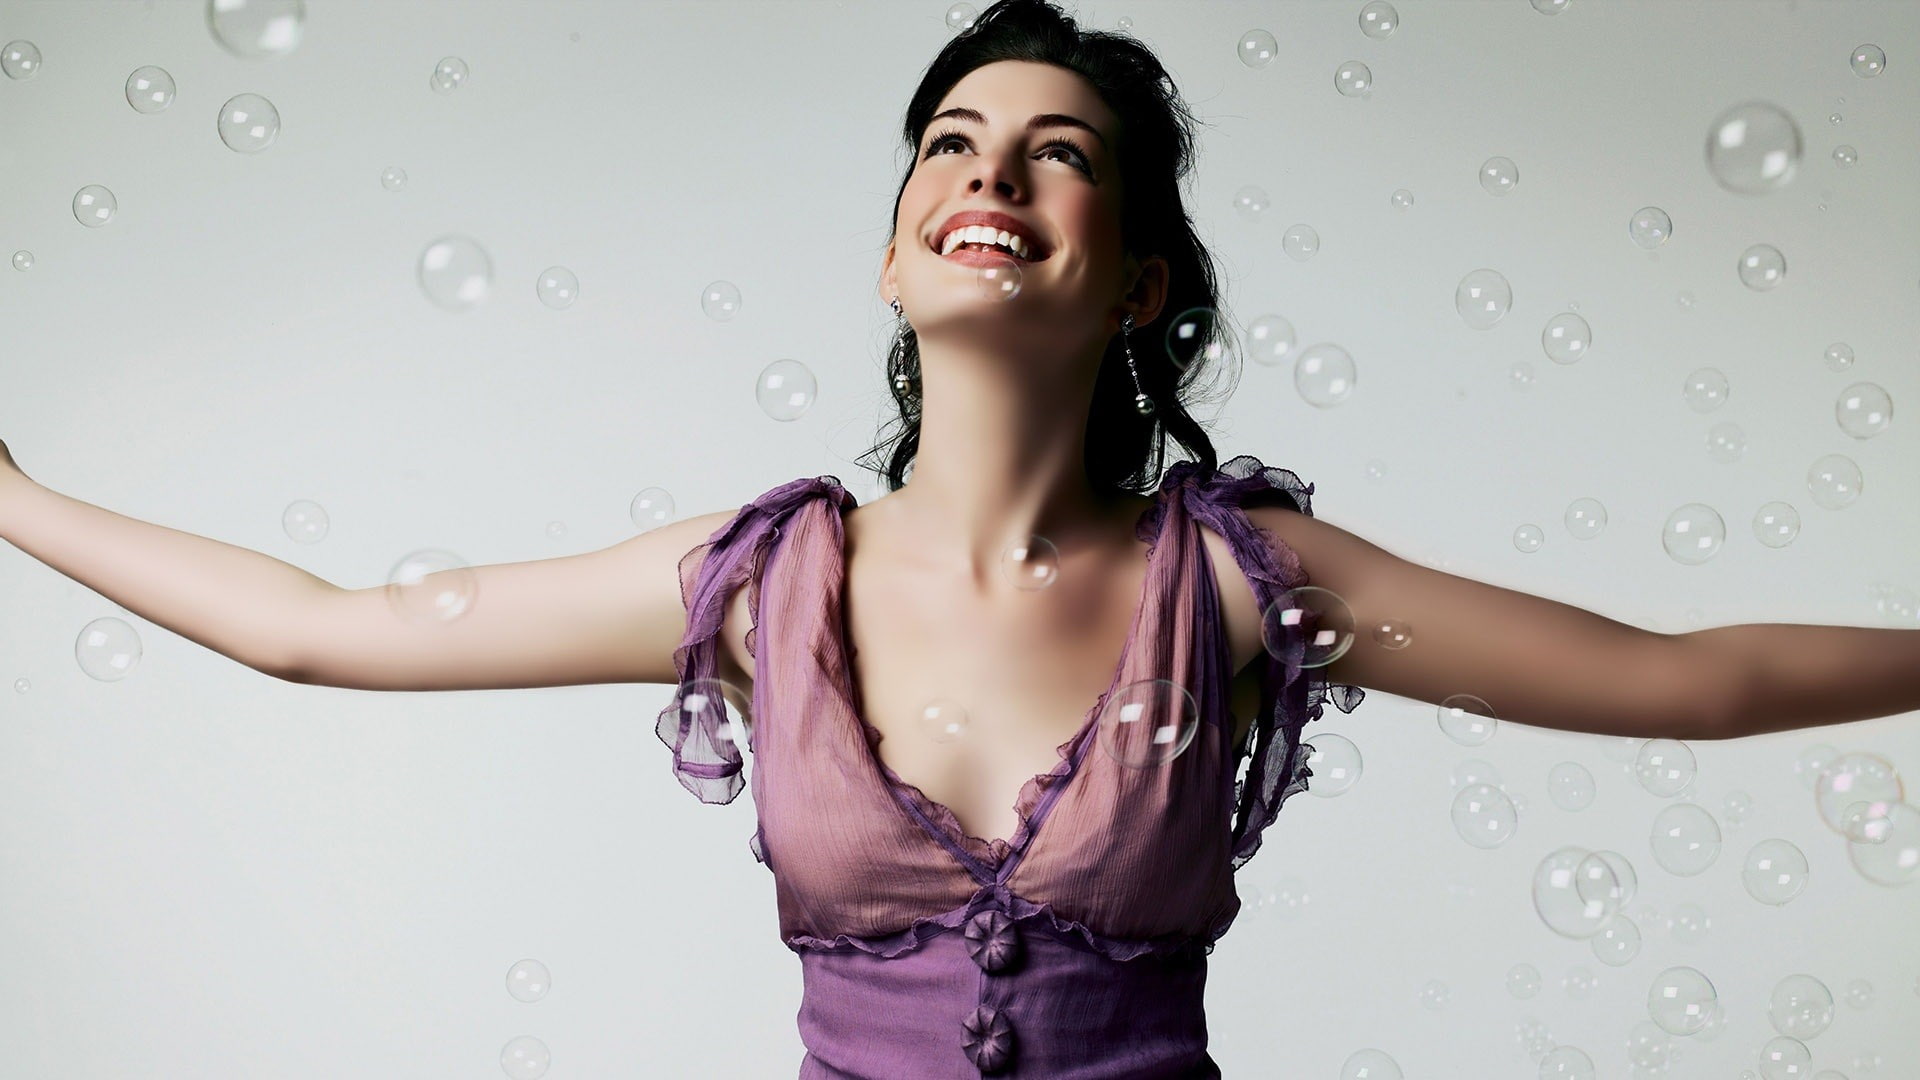 Anne Hathaway, smiling, bubbles, dress, actress, women, celebrity